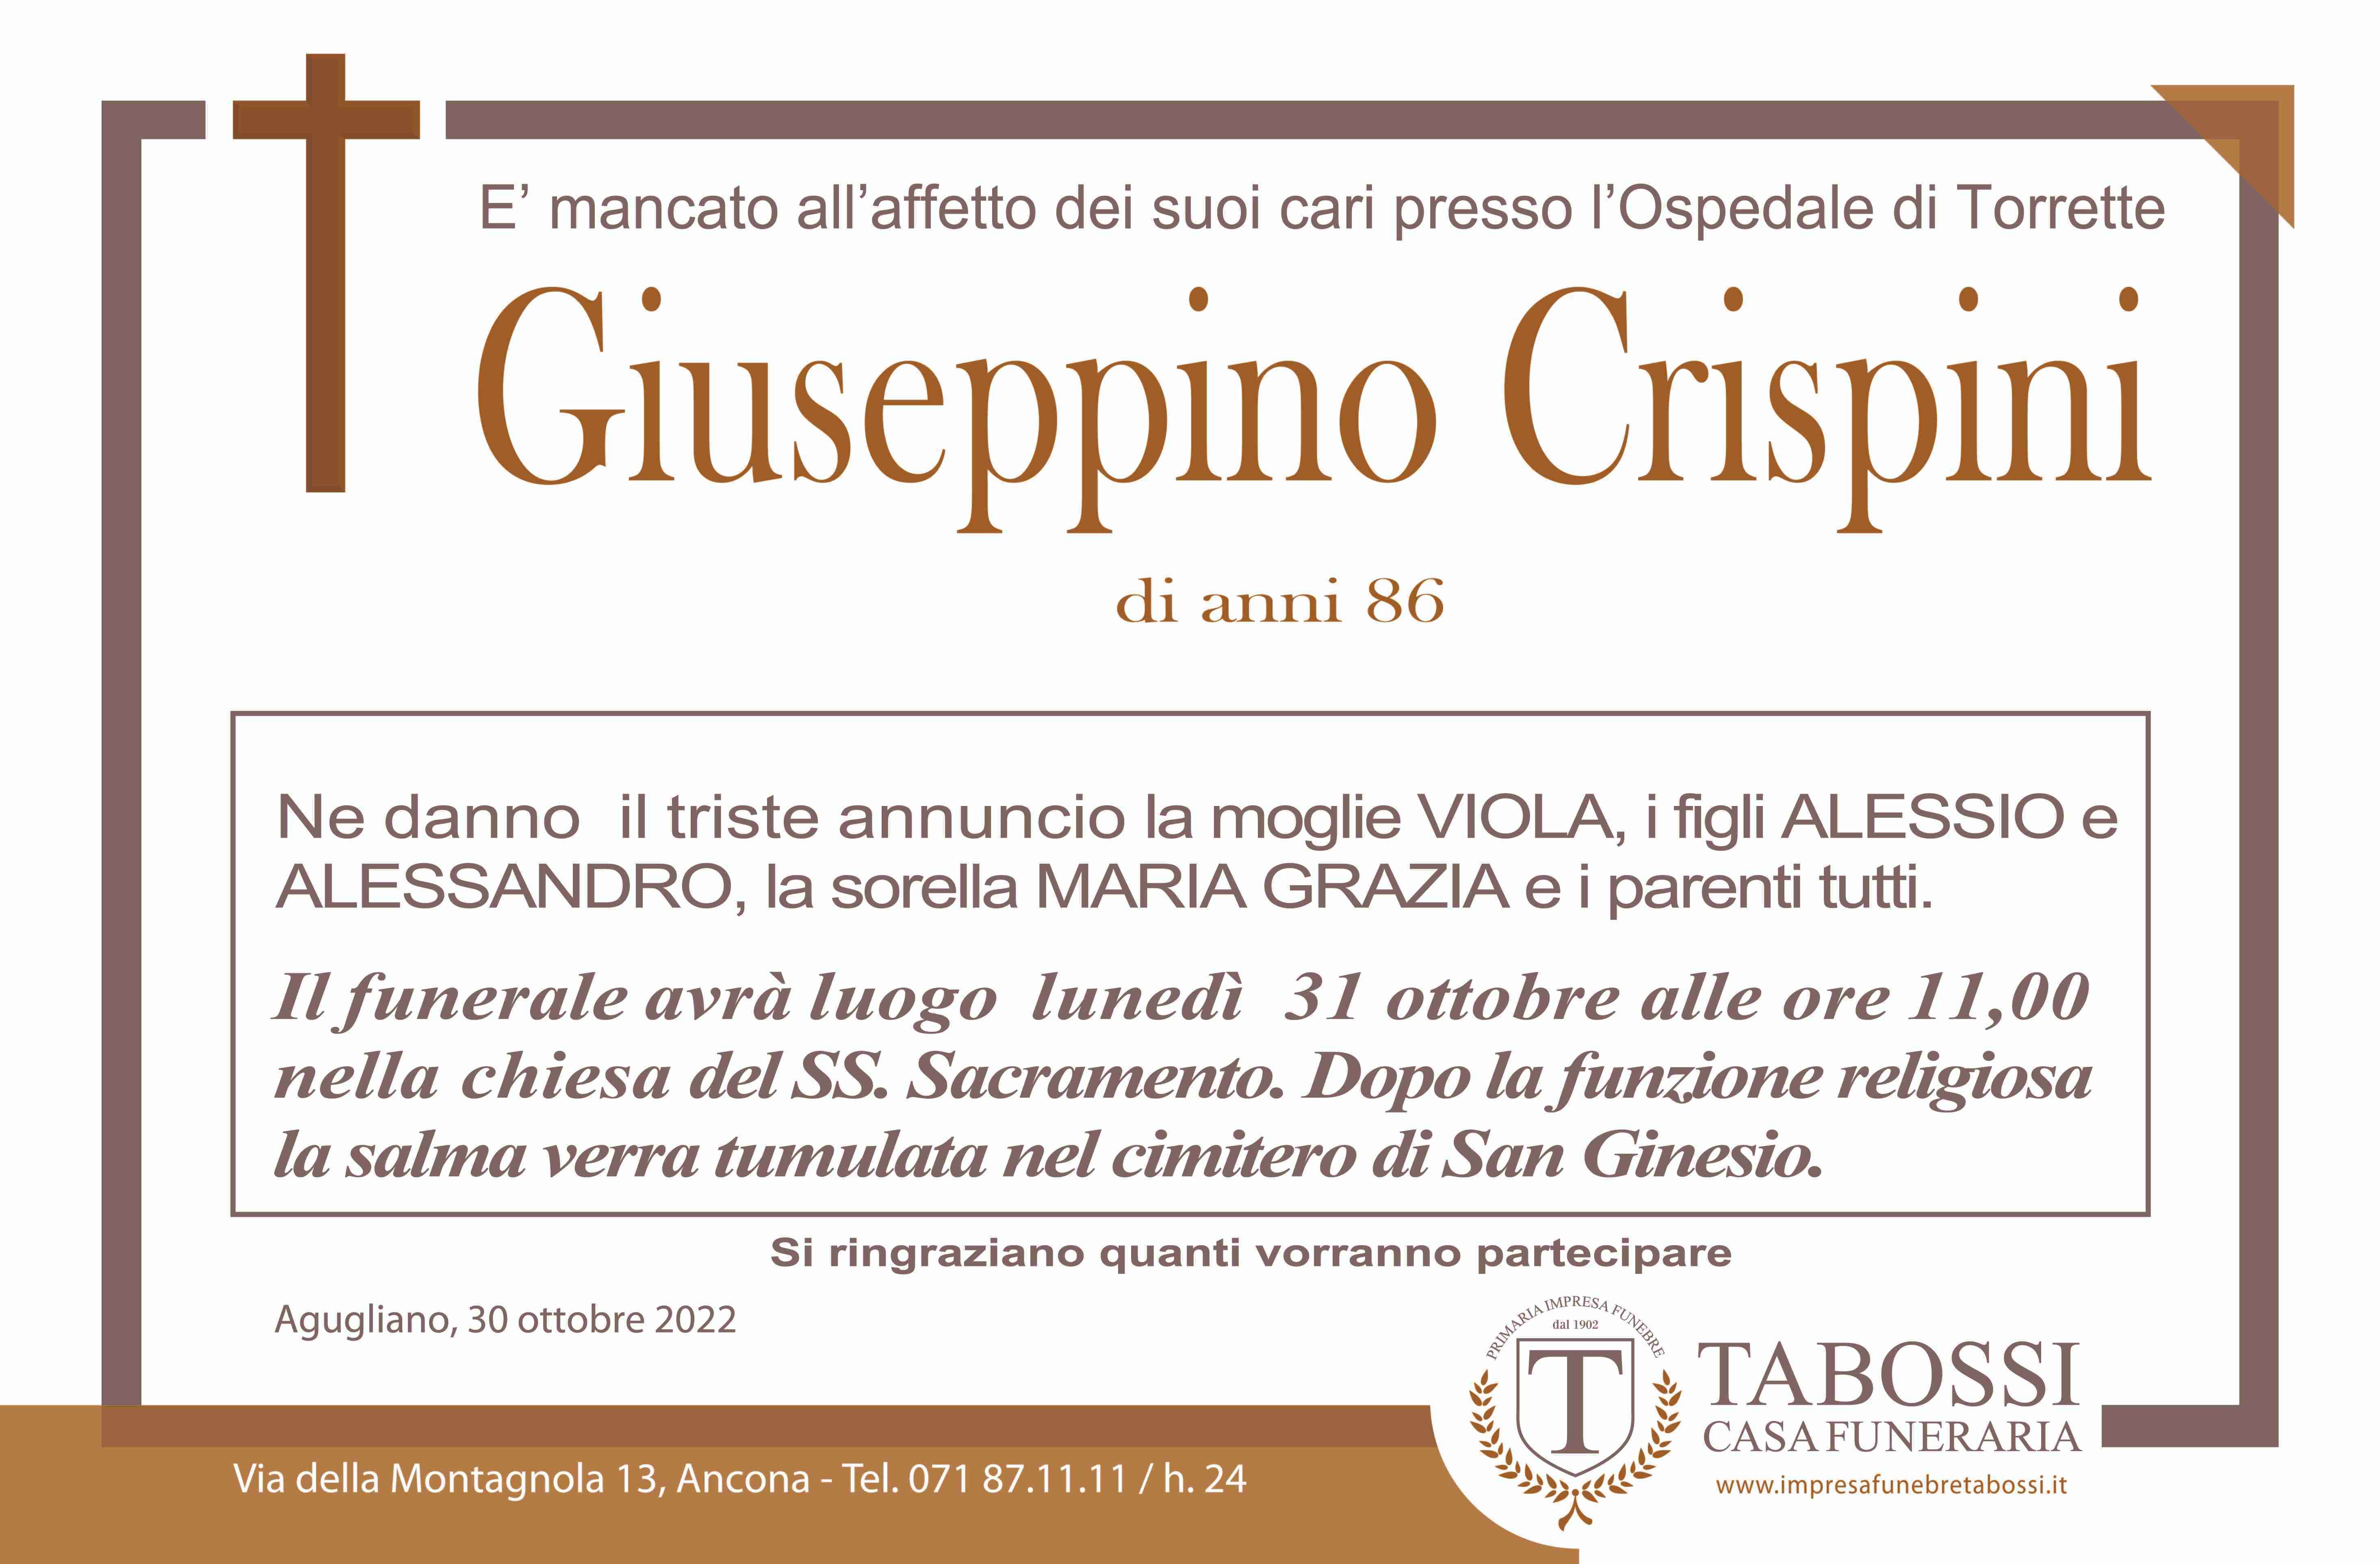 Giuseppino Crispini